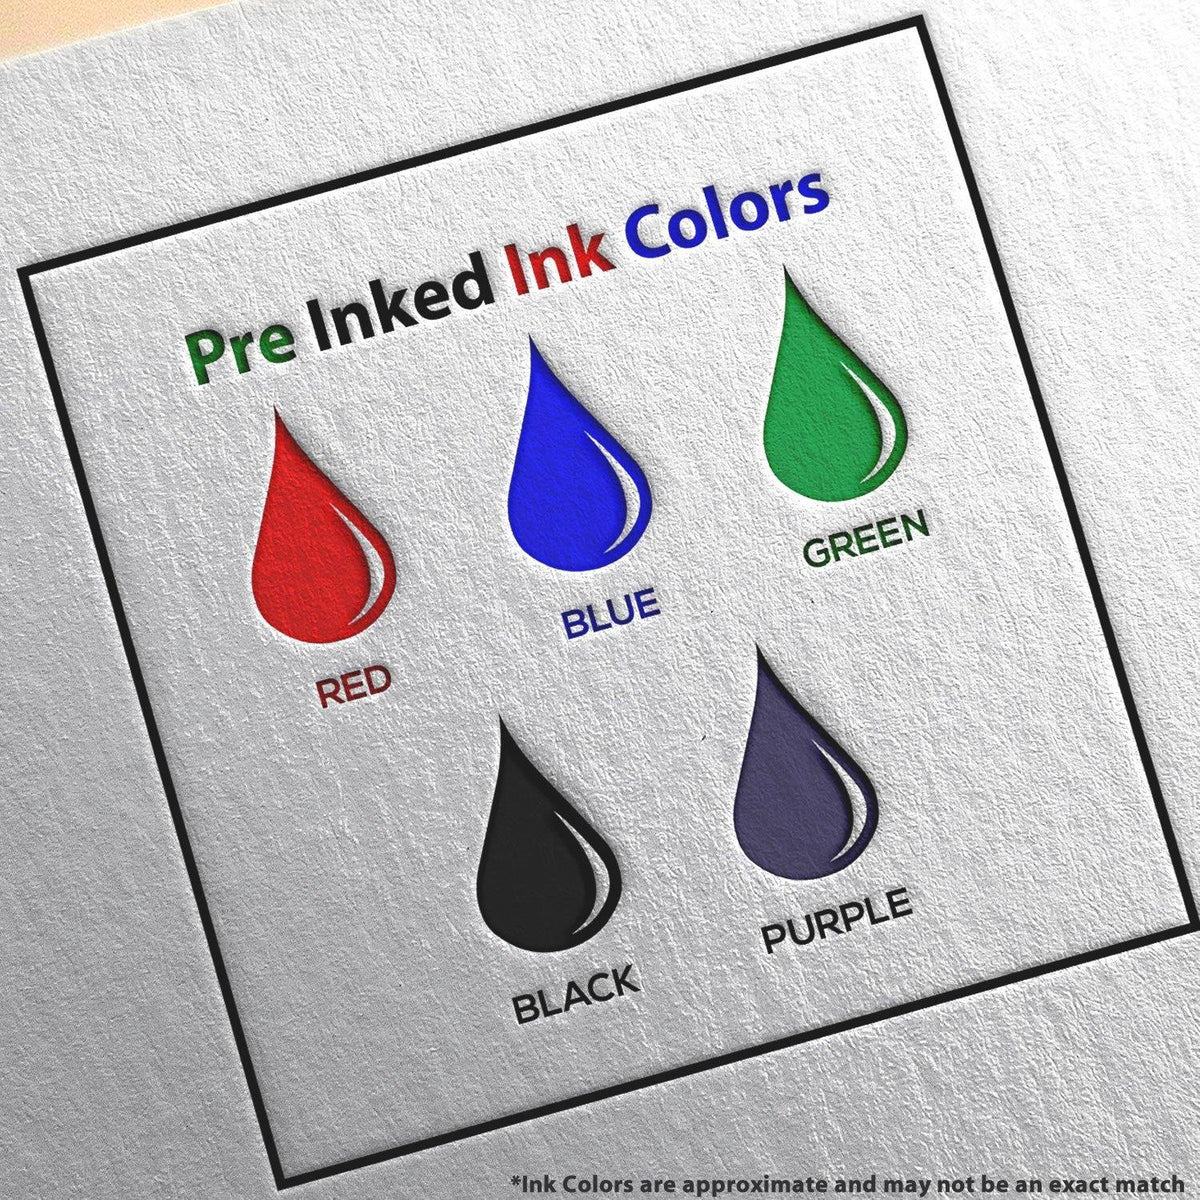 Large Pre Inked File Stamp Ink Color Options